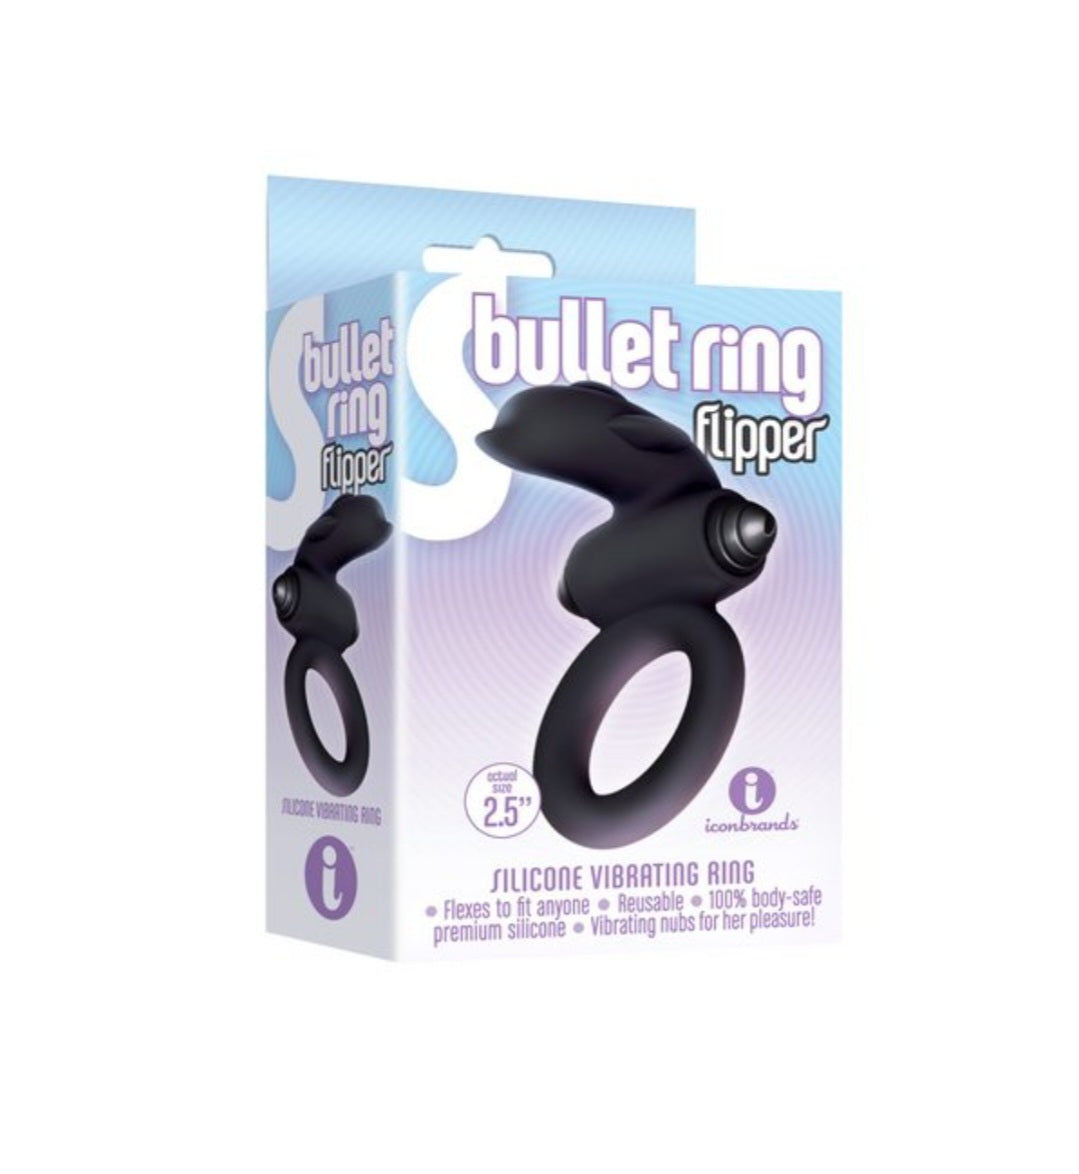 9's bullet flipper ring